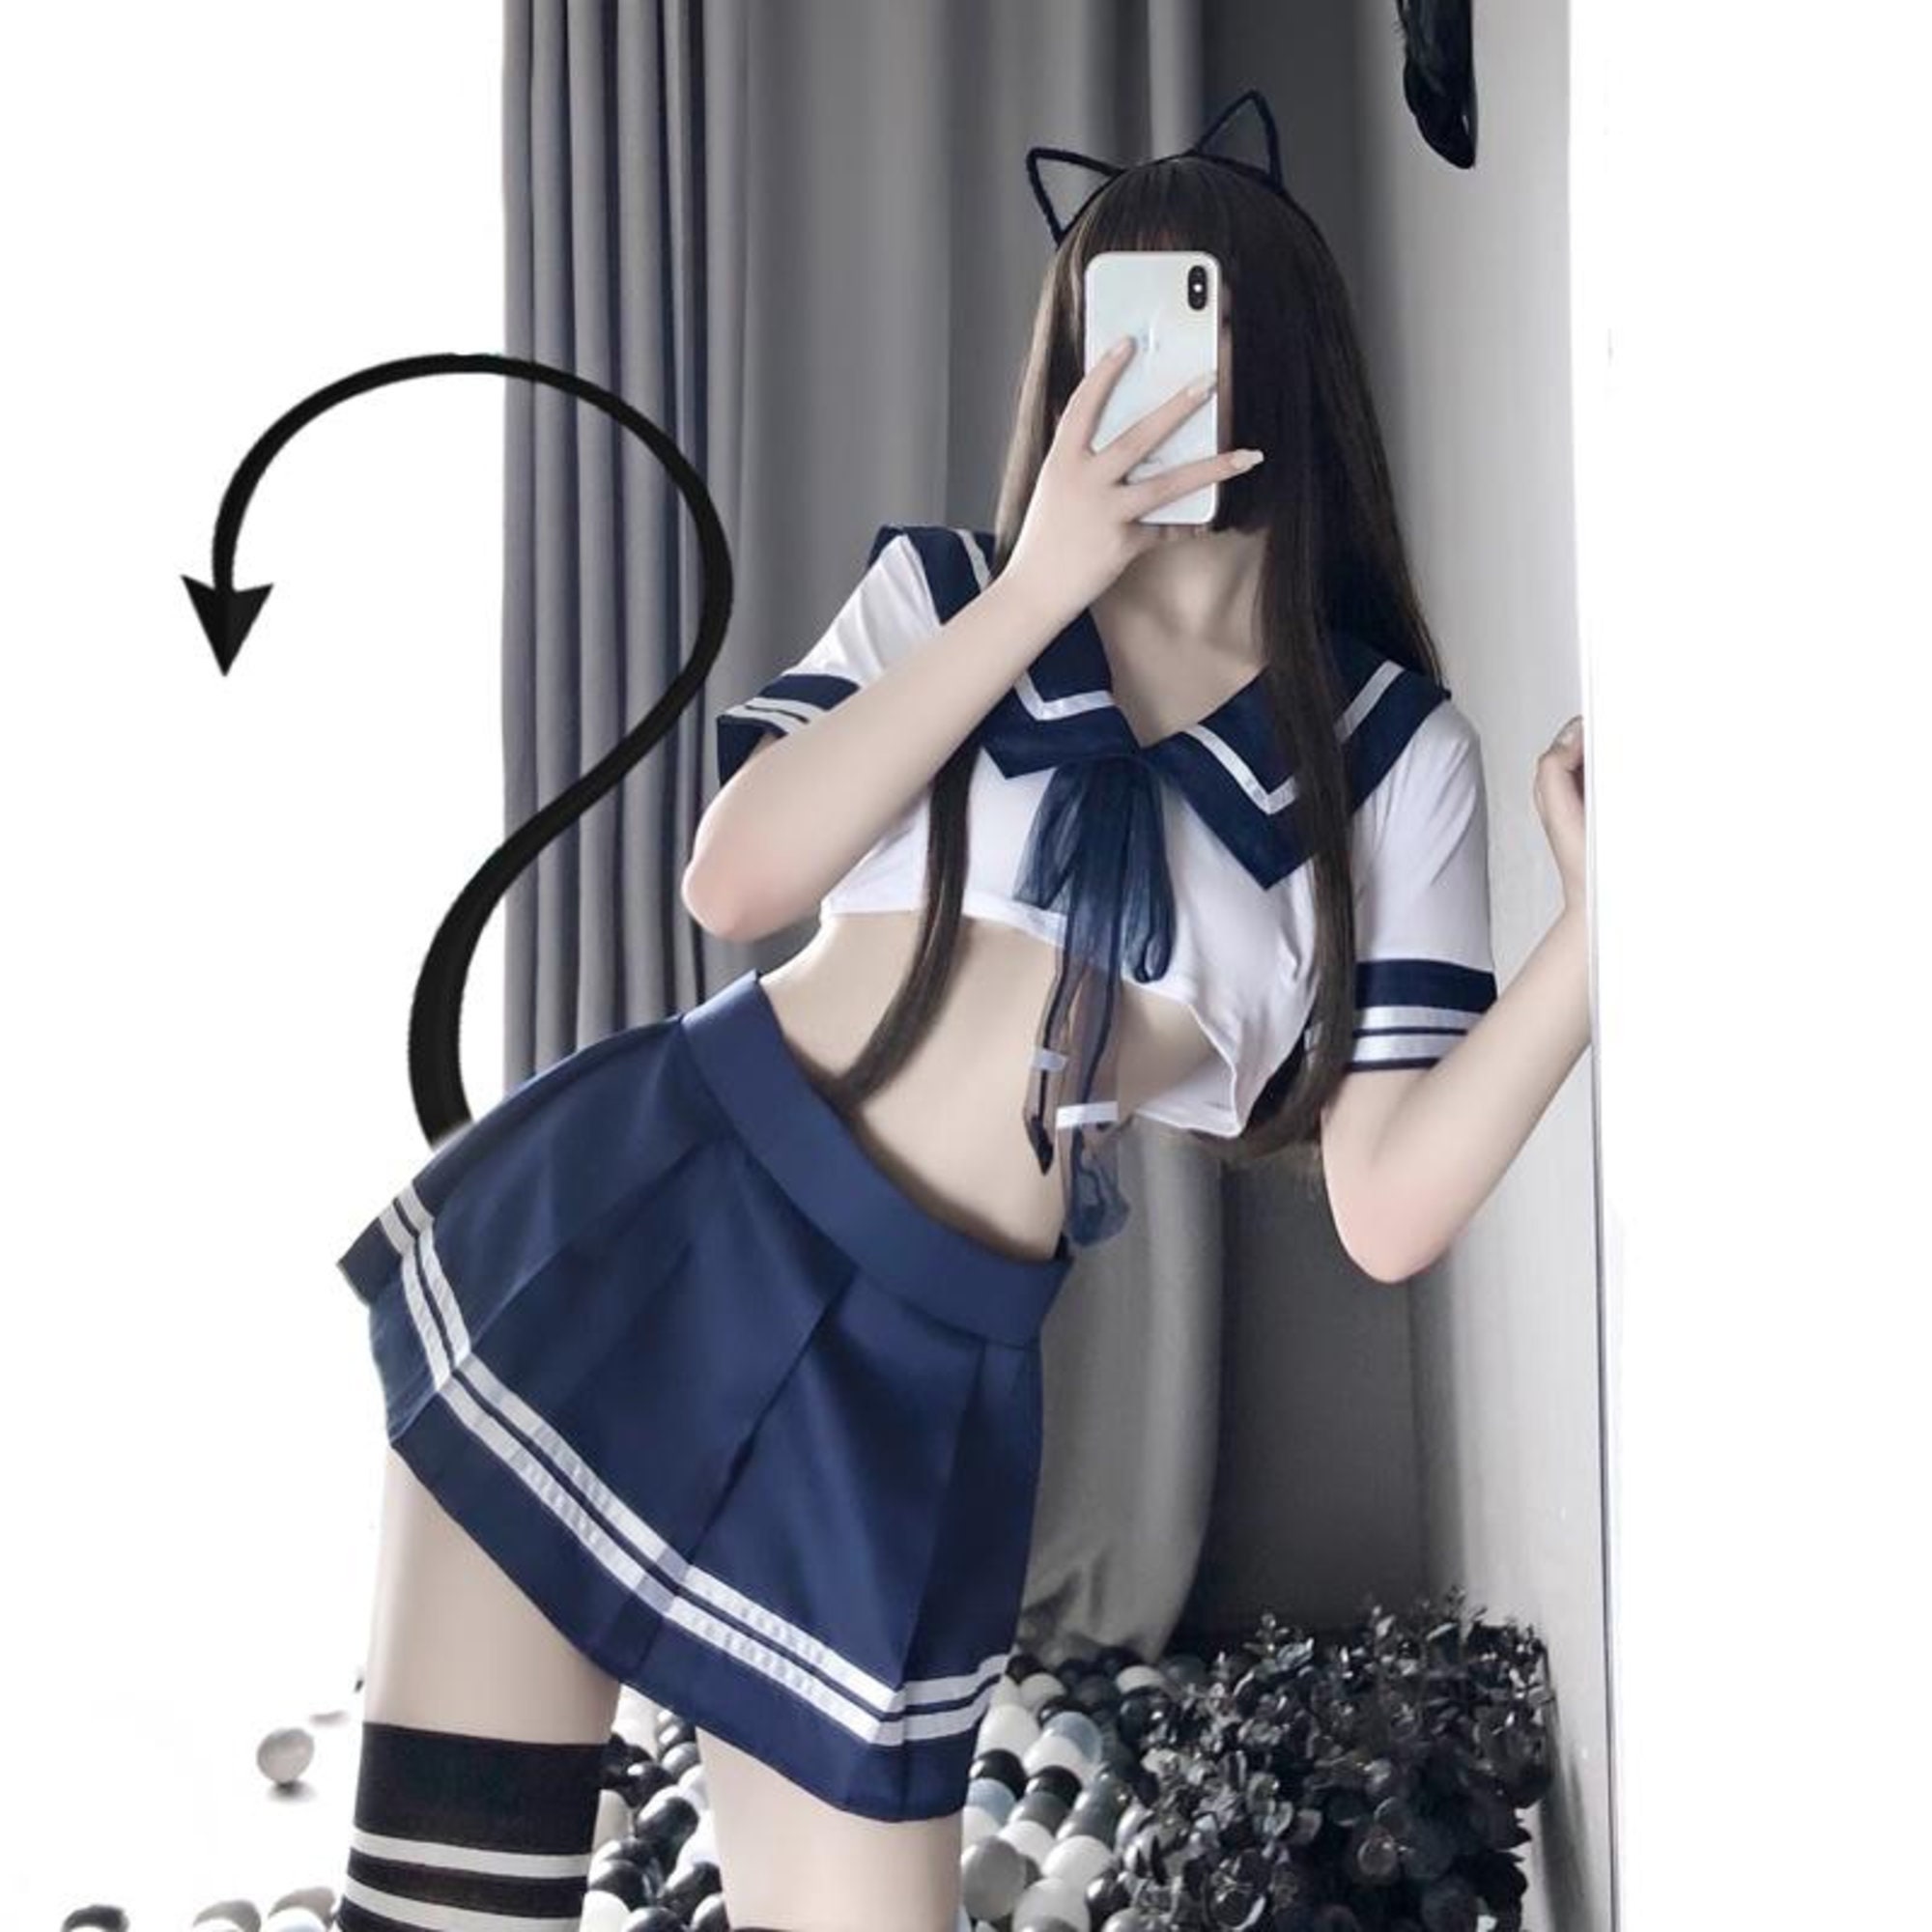 Japanese Anime Cheerleader Porn - Women Sexy Cosplay Anime School Girl Japanese With Miniskirt - Etsy